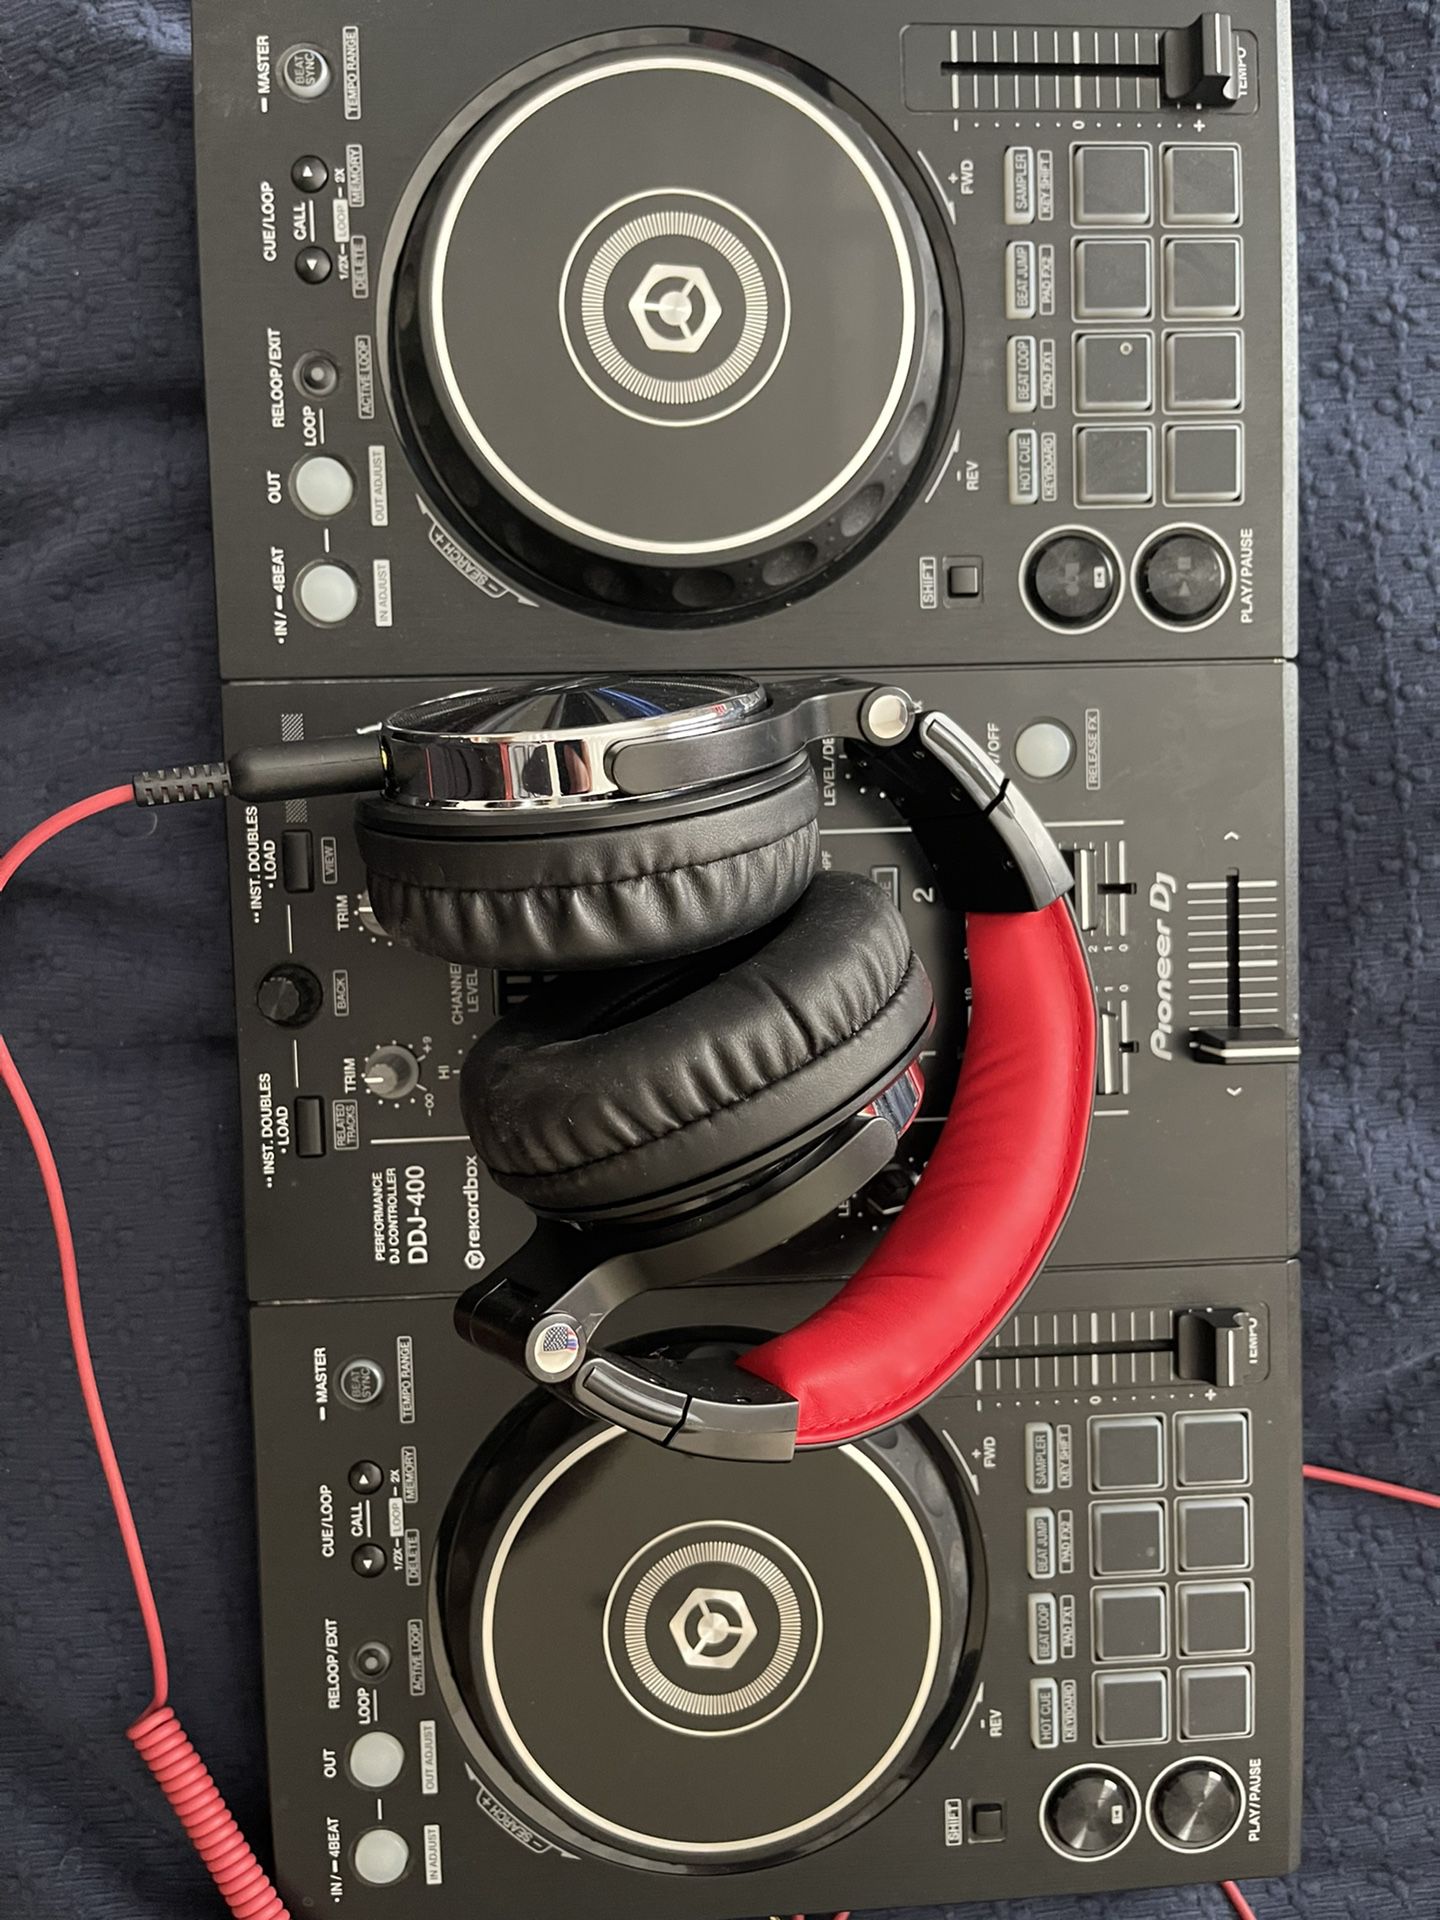 DDJ-400 Rekordbox DJ Controller and headset